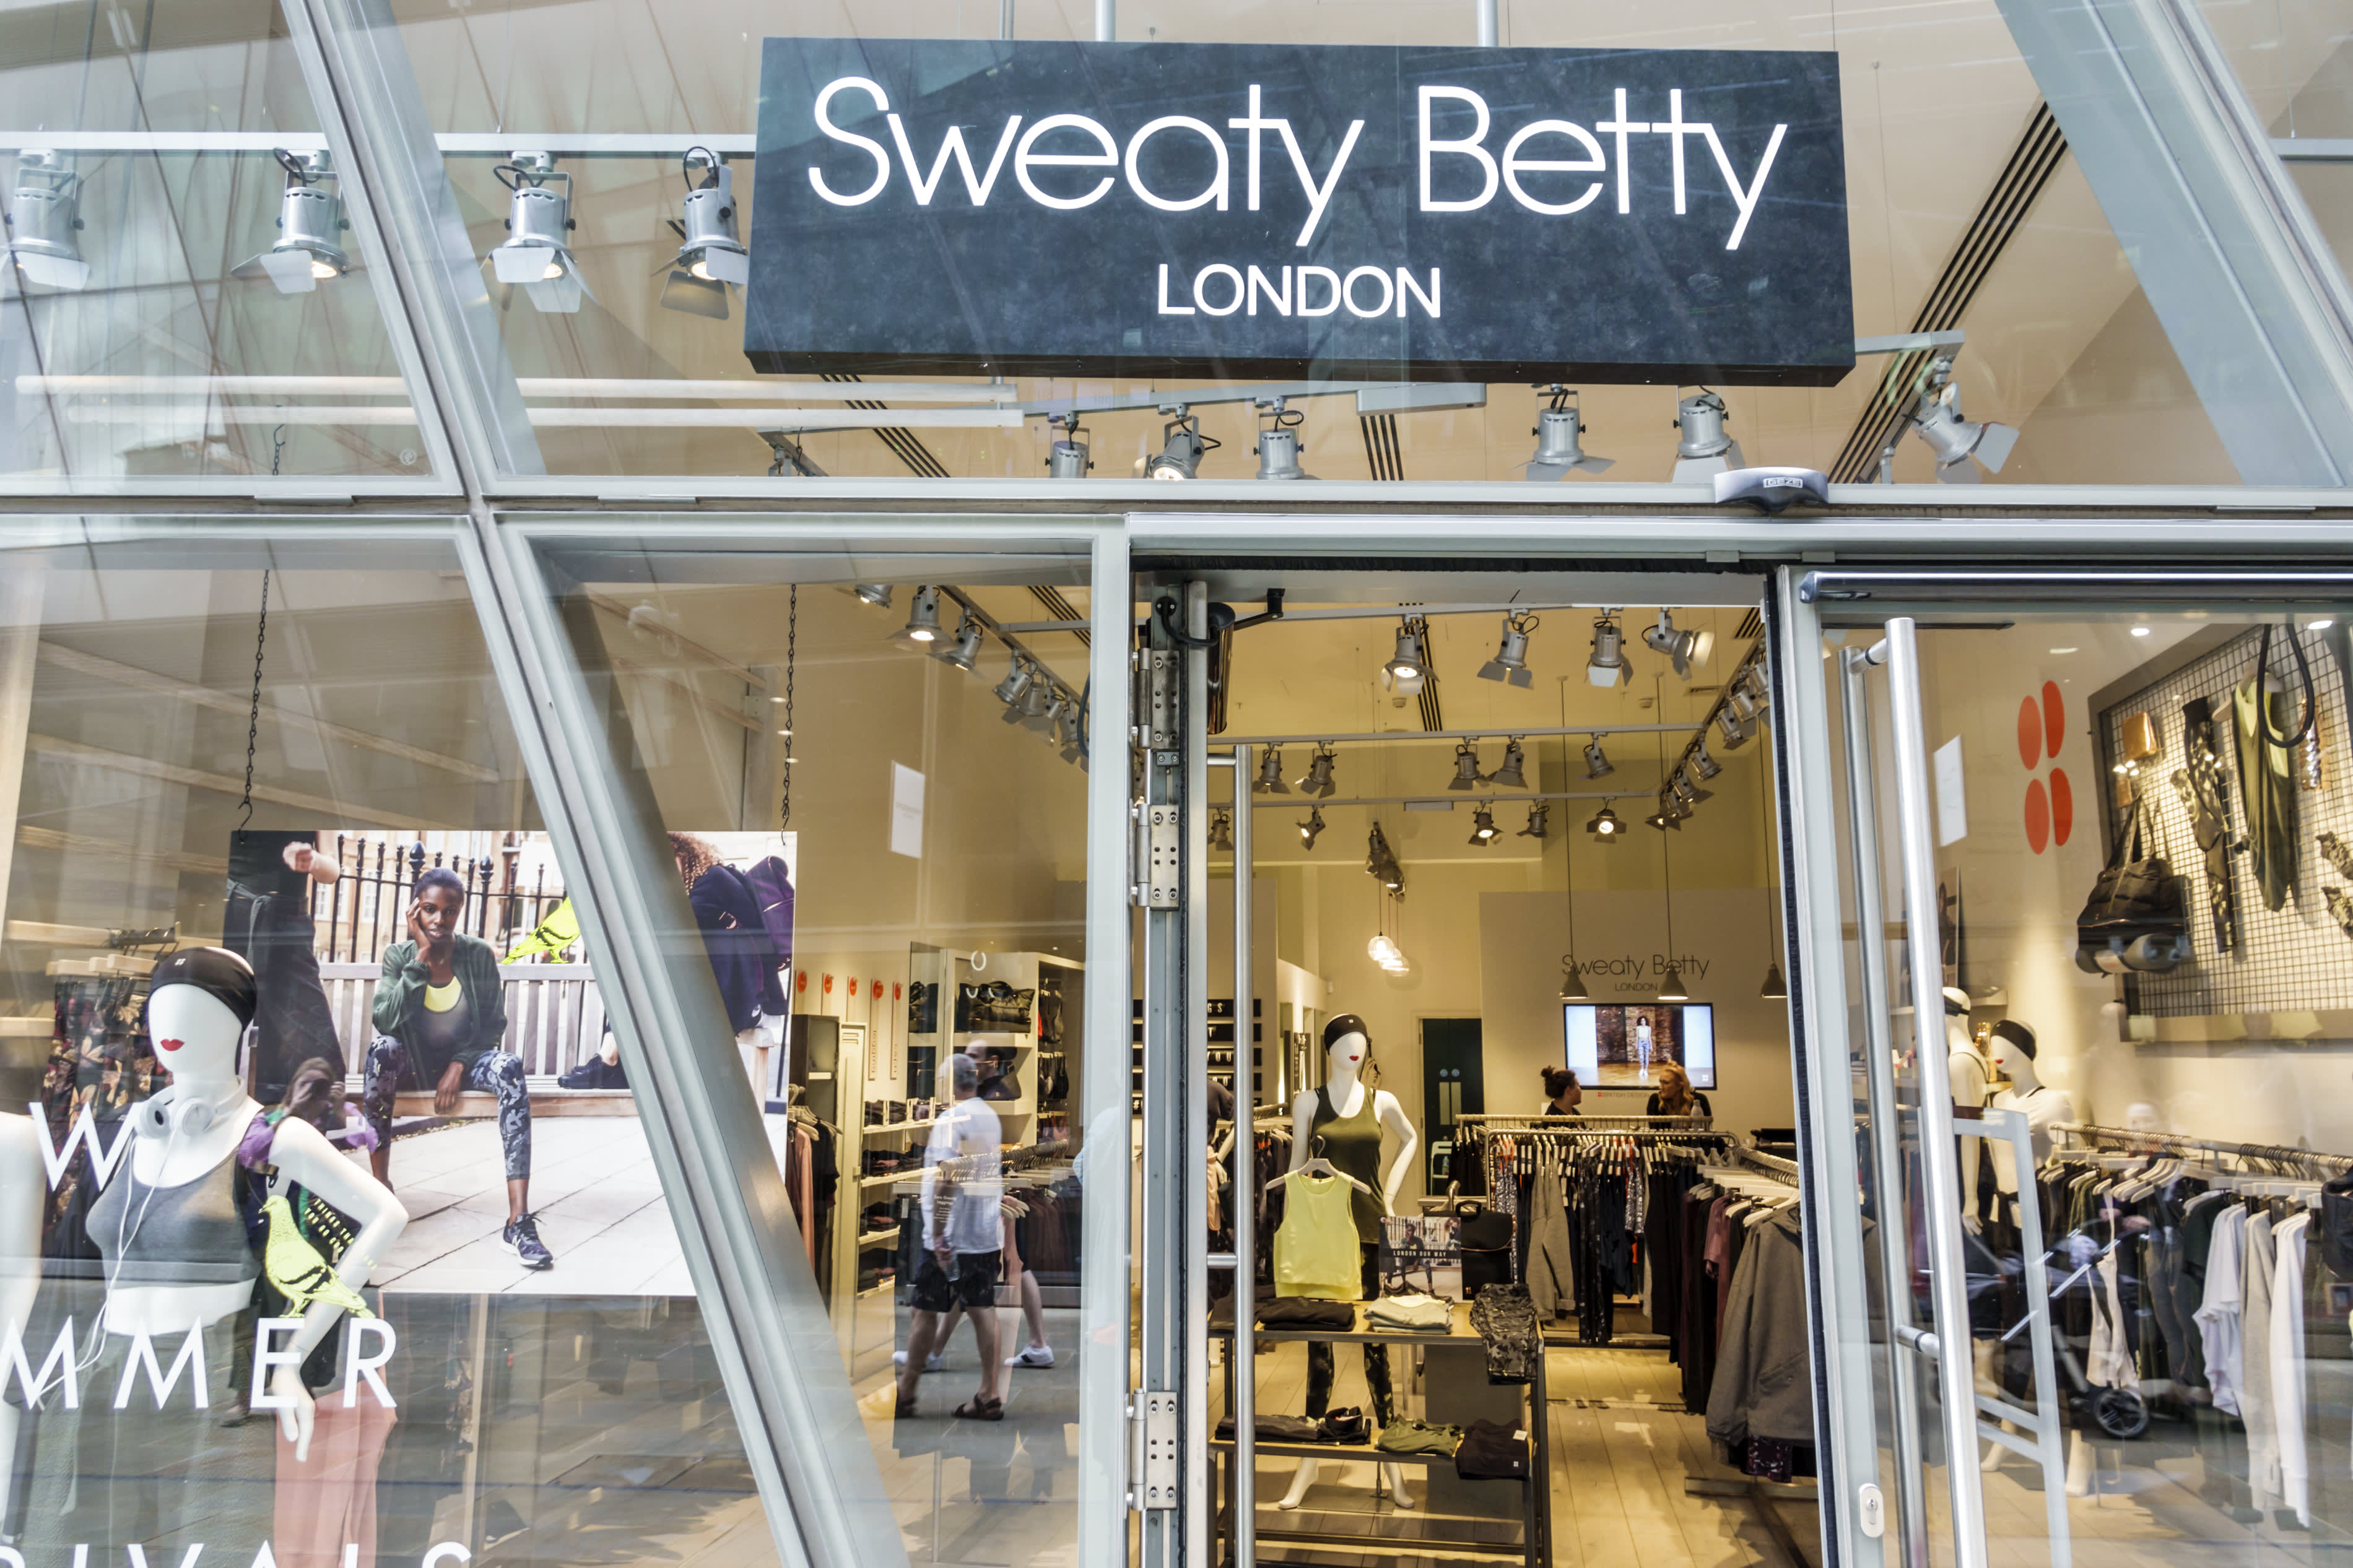 Wolverine Worldwide buys Sweaty Betty for $410 million